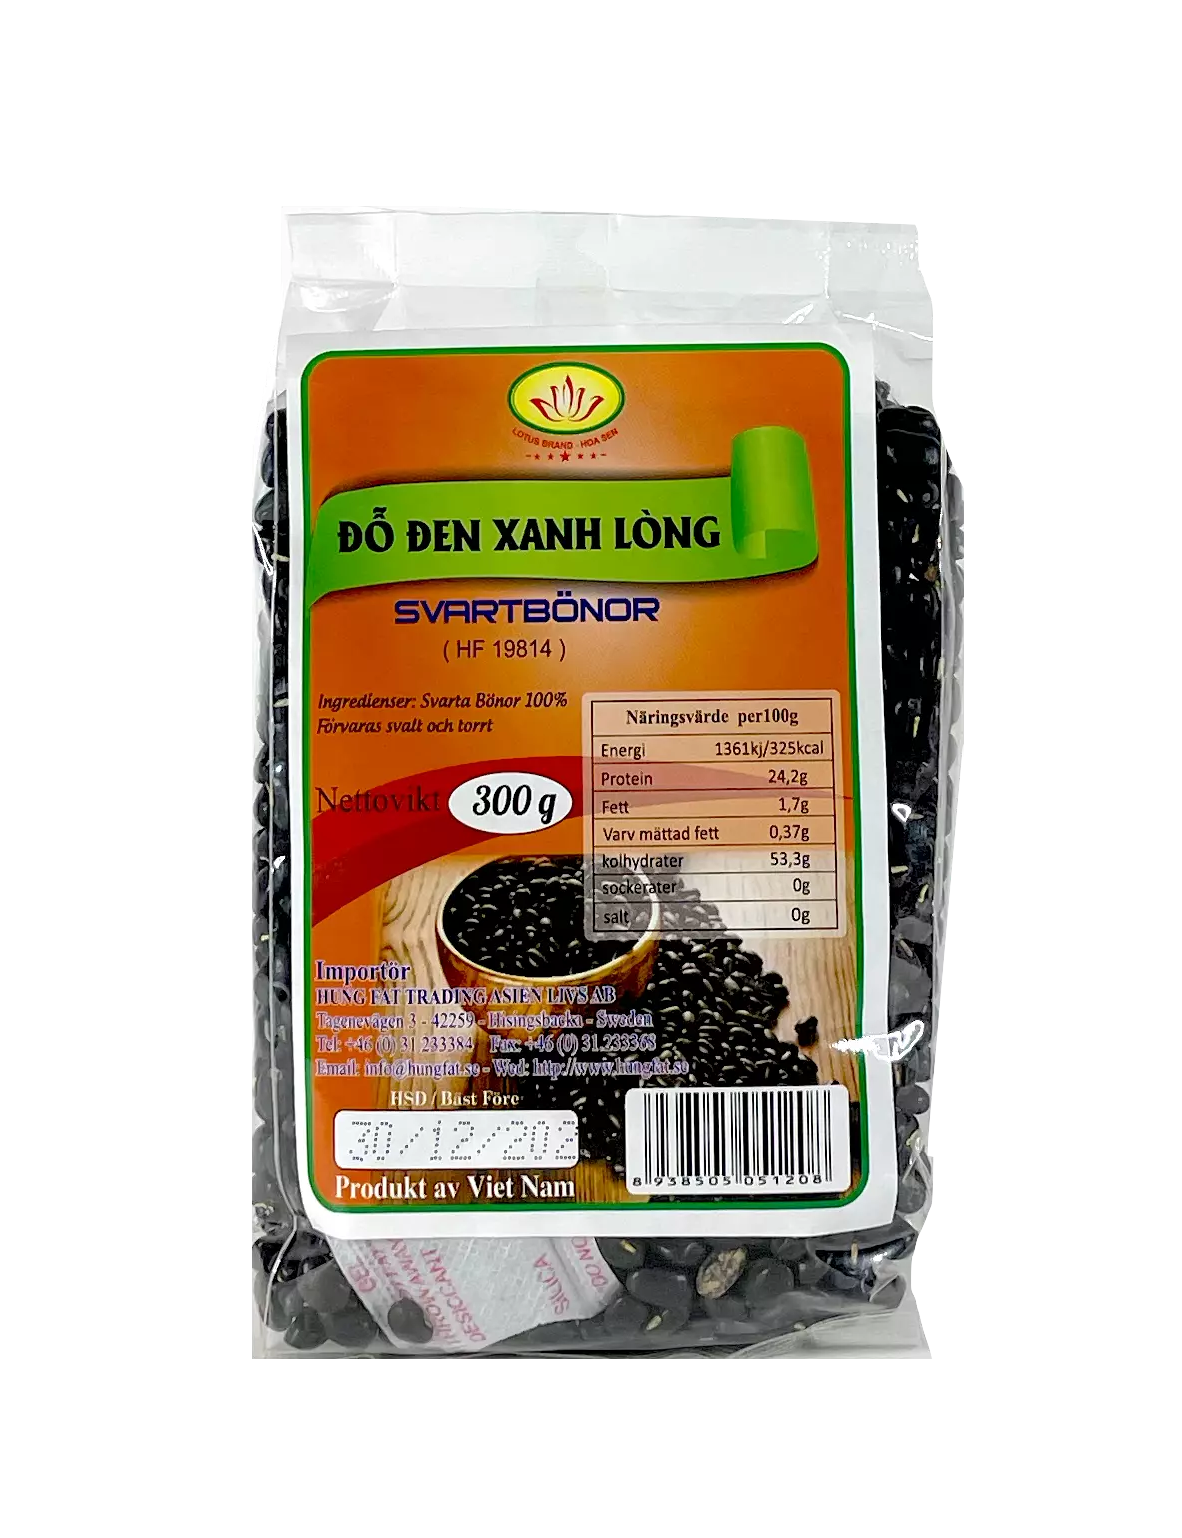 Black beans 300g - Dau Den Xanh Long Vietnam